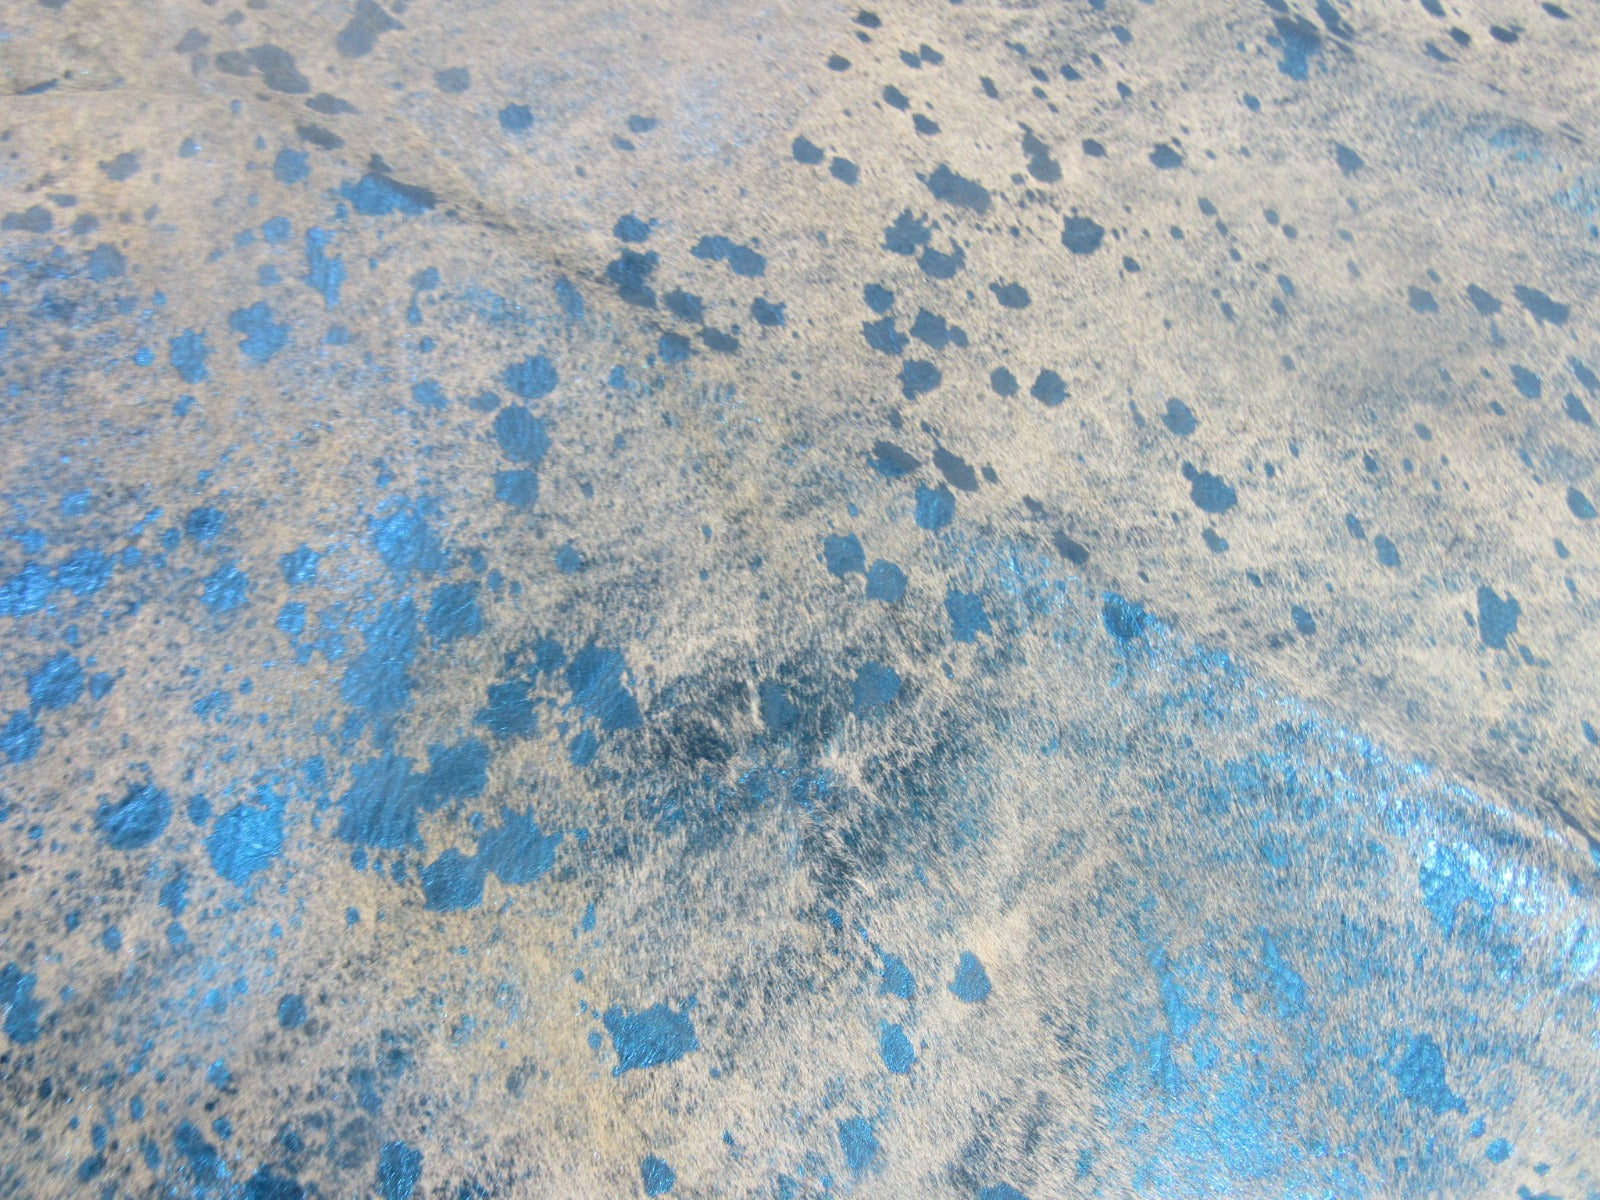 Natural Light Cowhide Rug with Blue Metallic Acid Wash - Size: 7x6 feet K-263